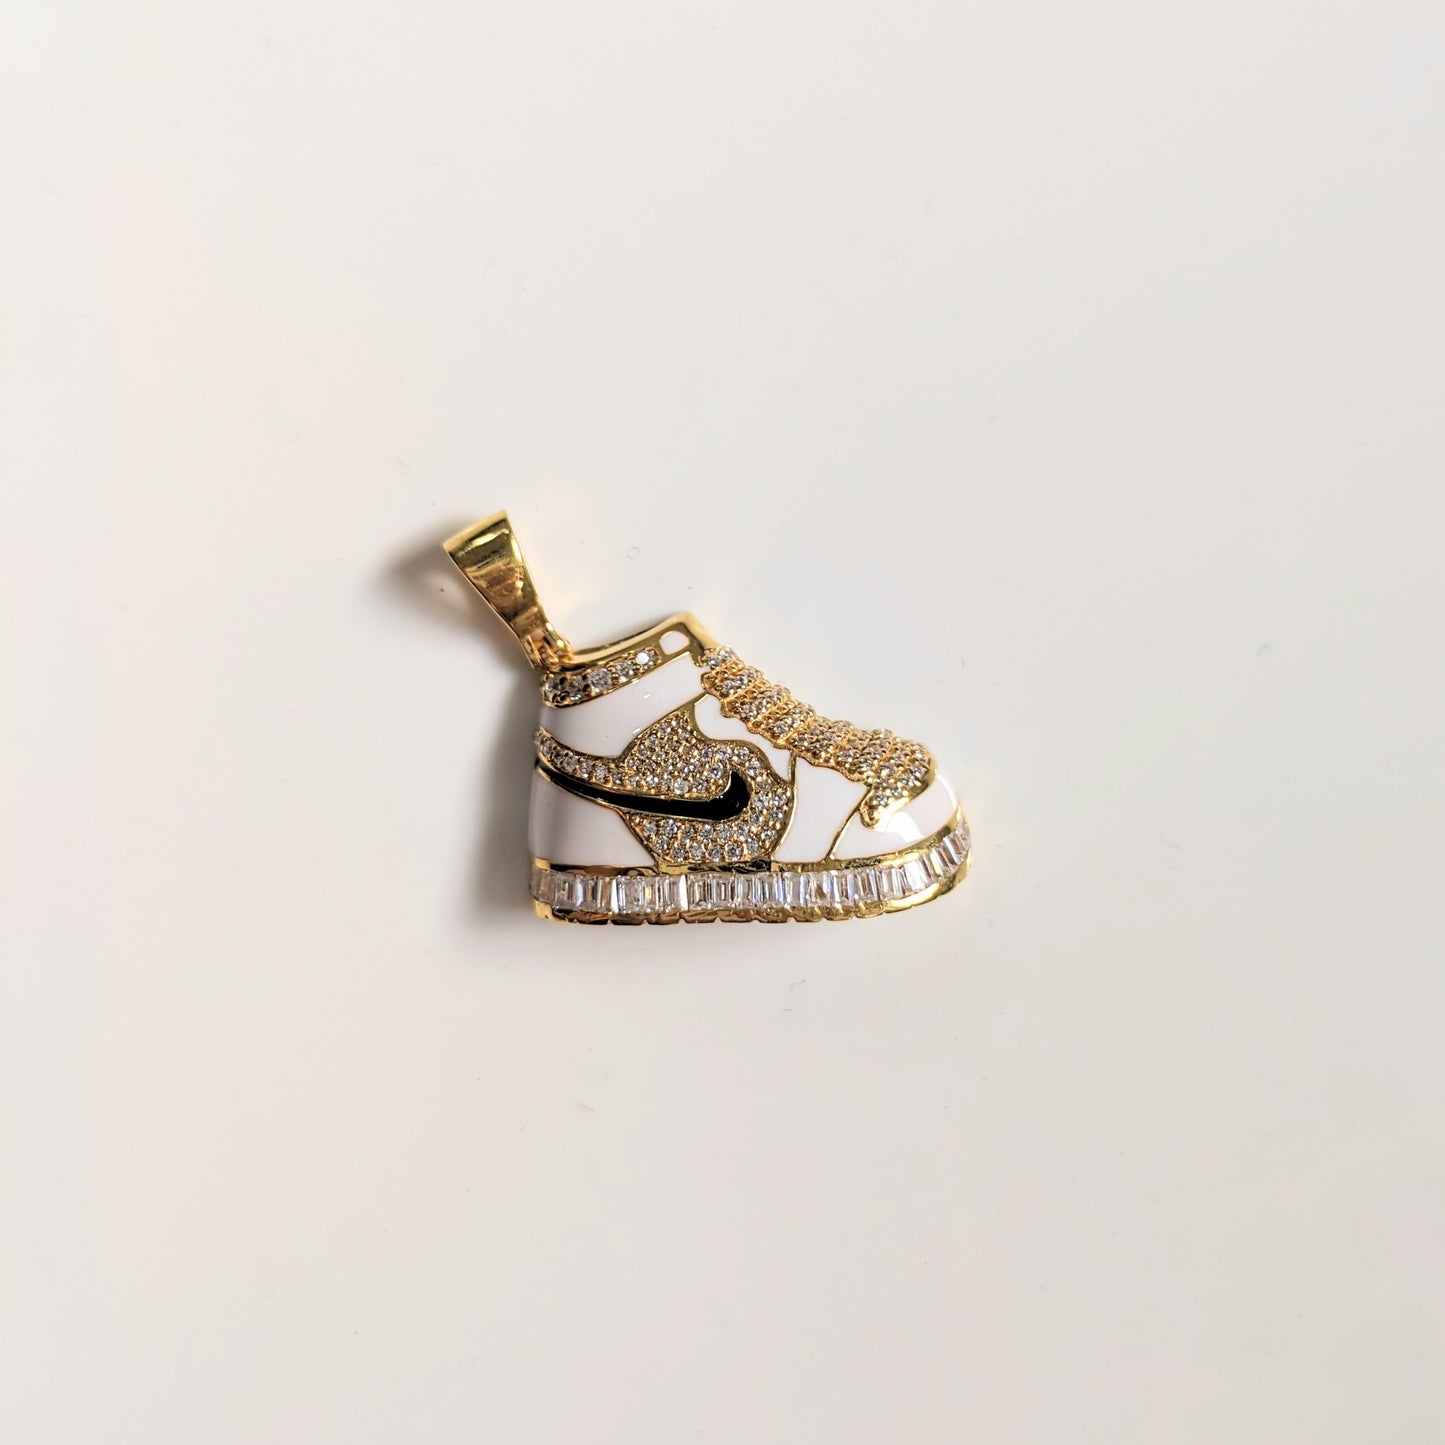 EXCLUSIVE - Jordan Pendant - 925 Silver - Limited Edition